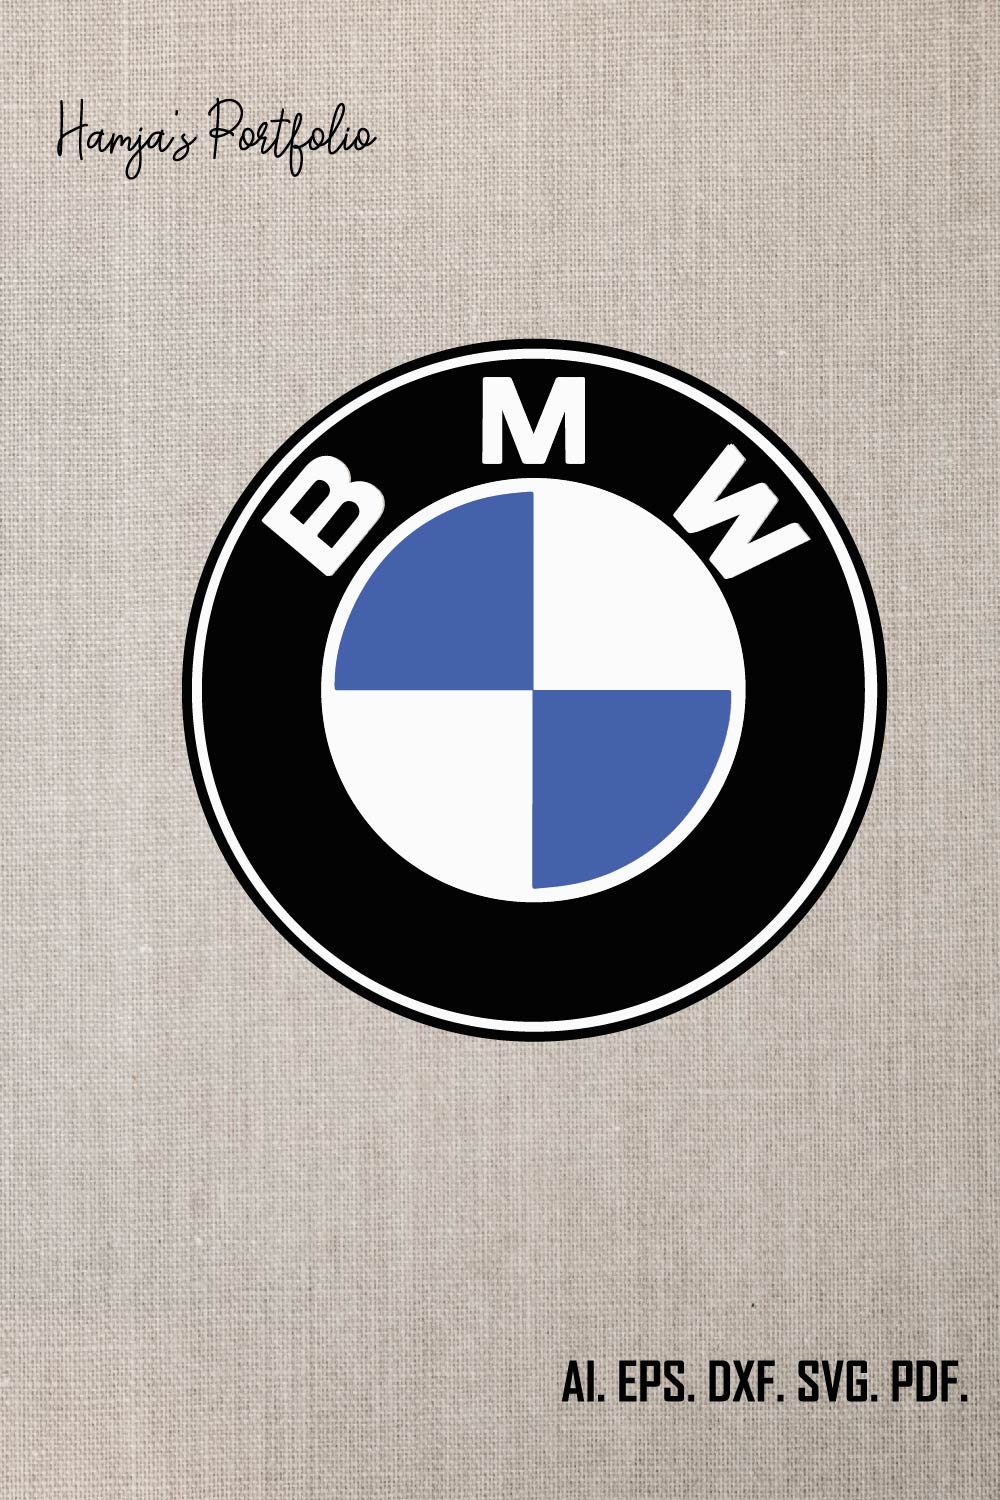 Bmw Car Logo, Png, Pdf, Eps, Dxf, Svg, Cricut cut file Instant Download ll layered digital vector file, Car Logo pinterest preview image.